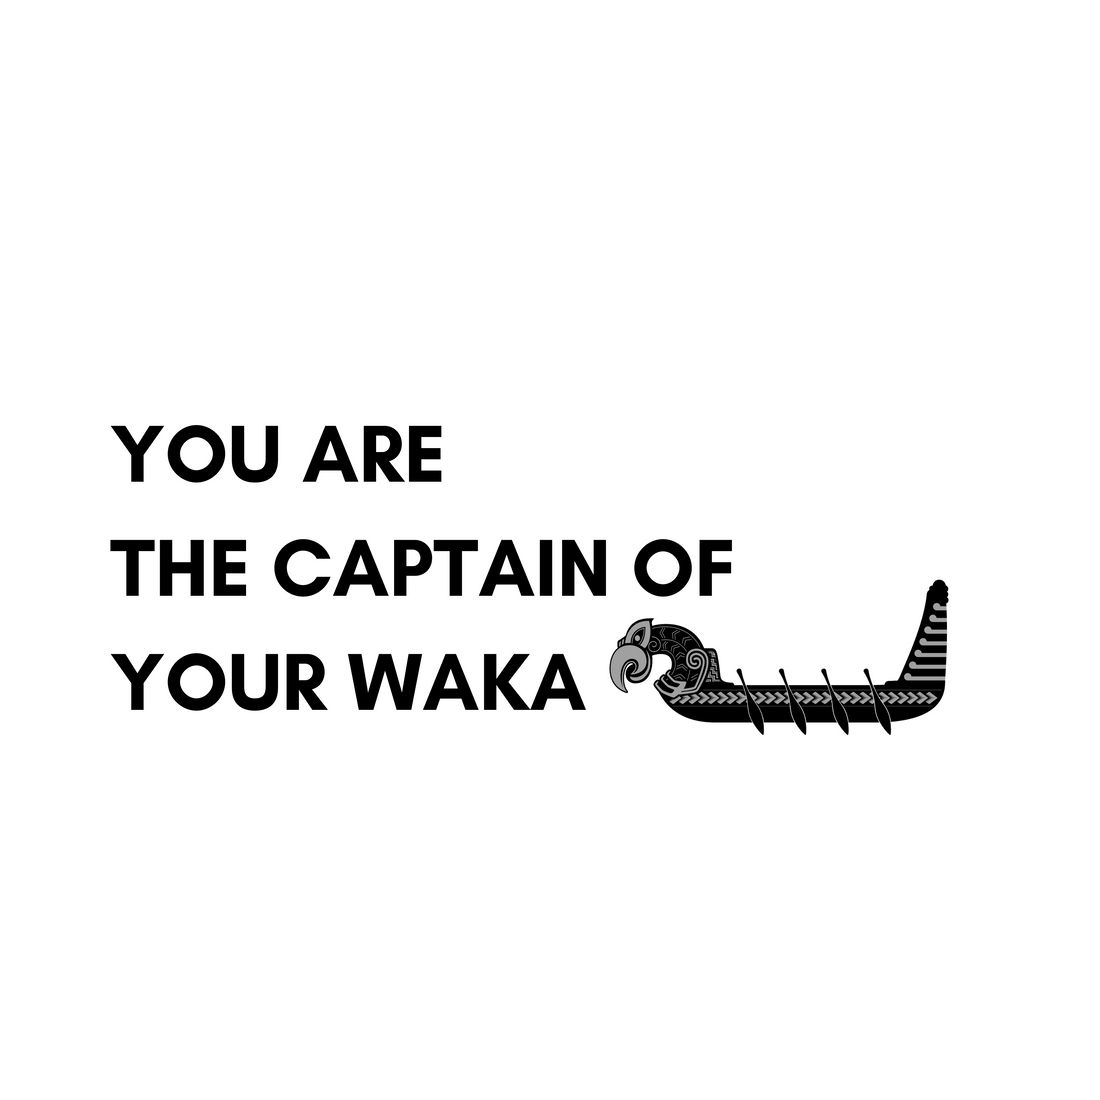 waka, maori canoe, captain, empower, power, stress